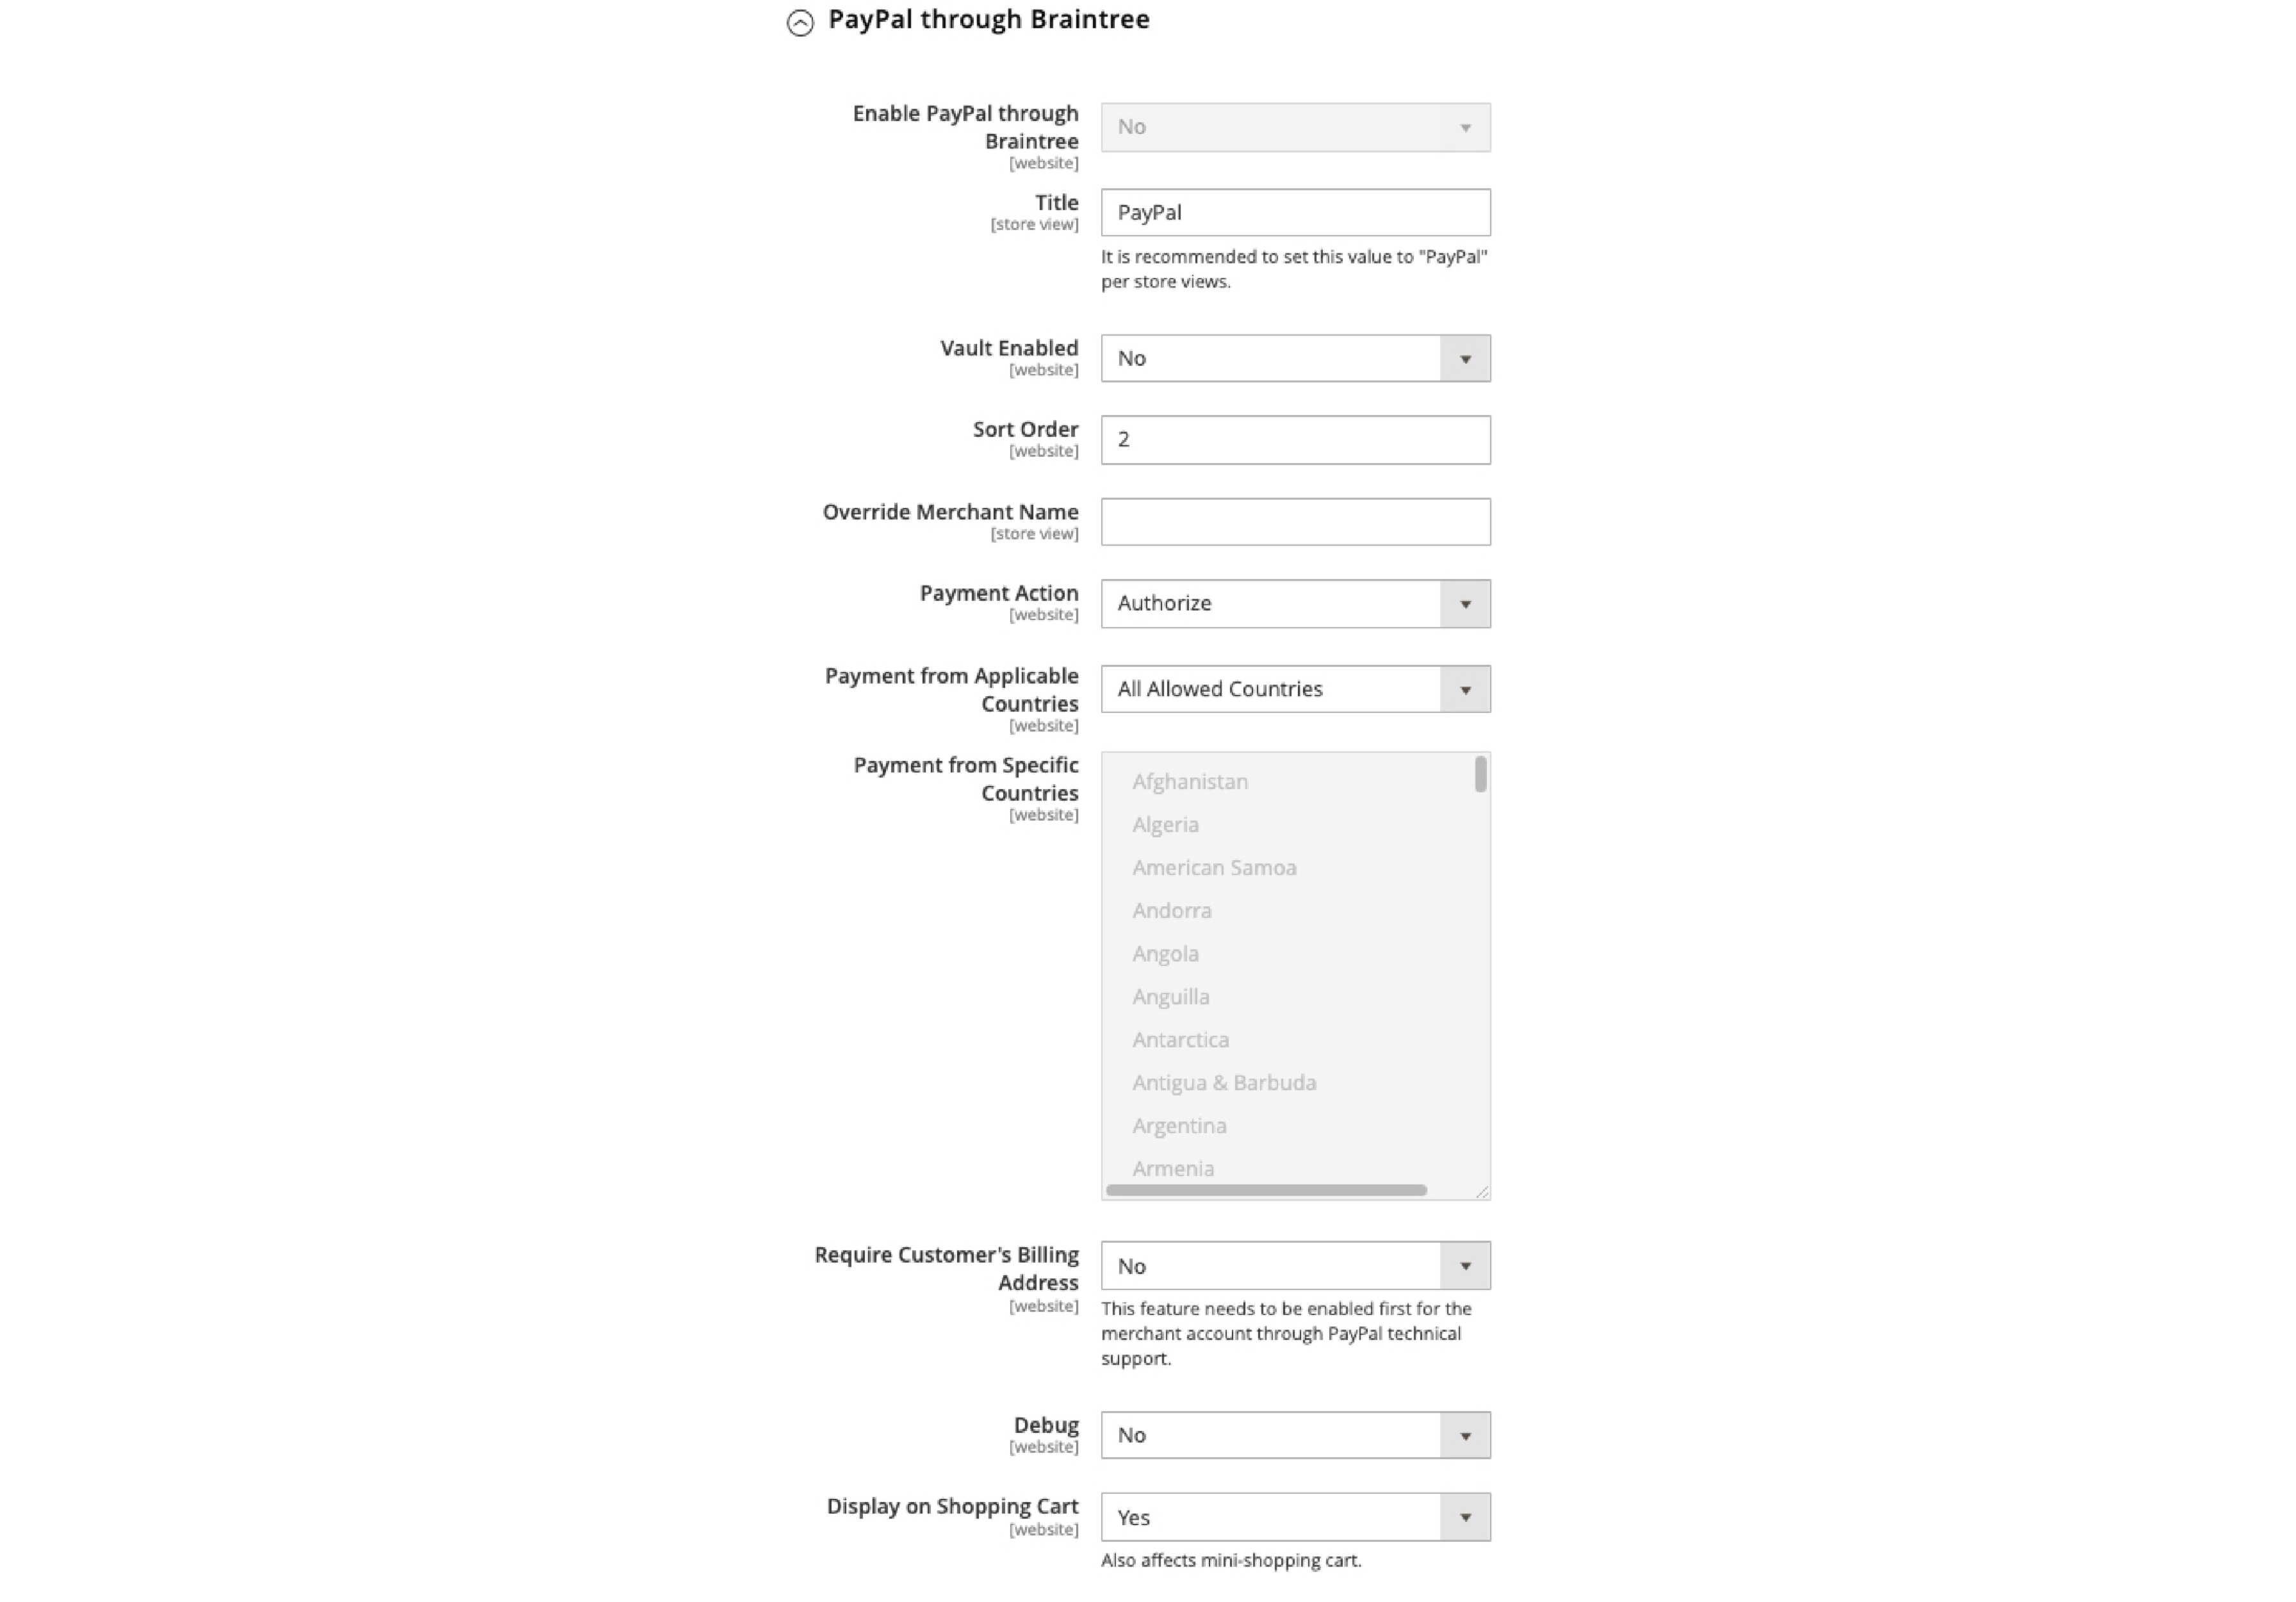 PayPal settings via Braintree in Magento 2